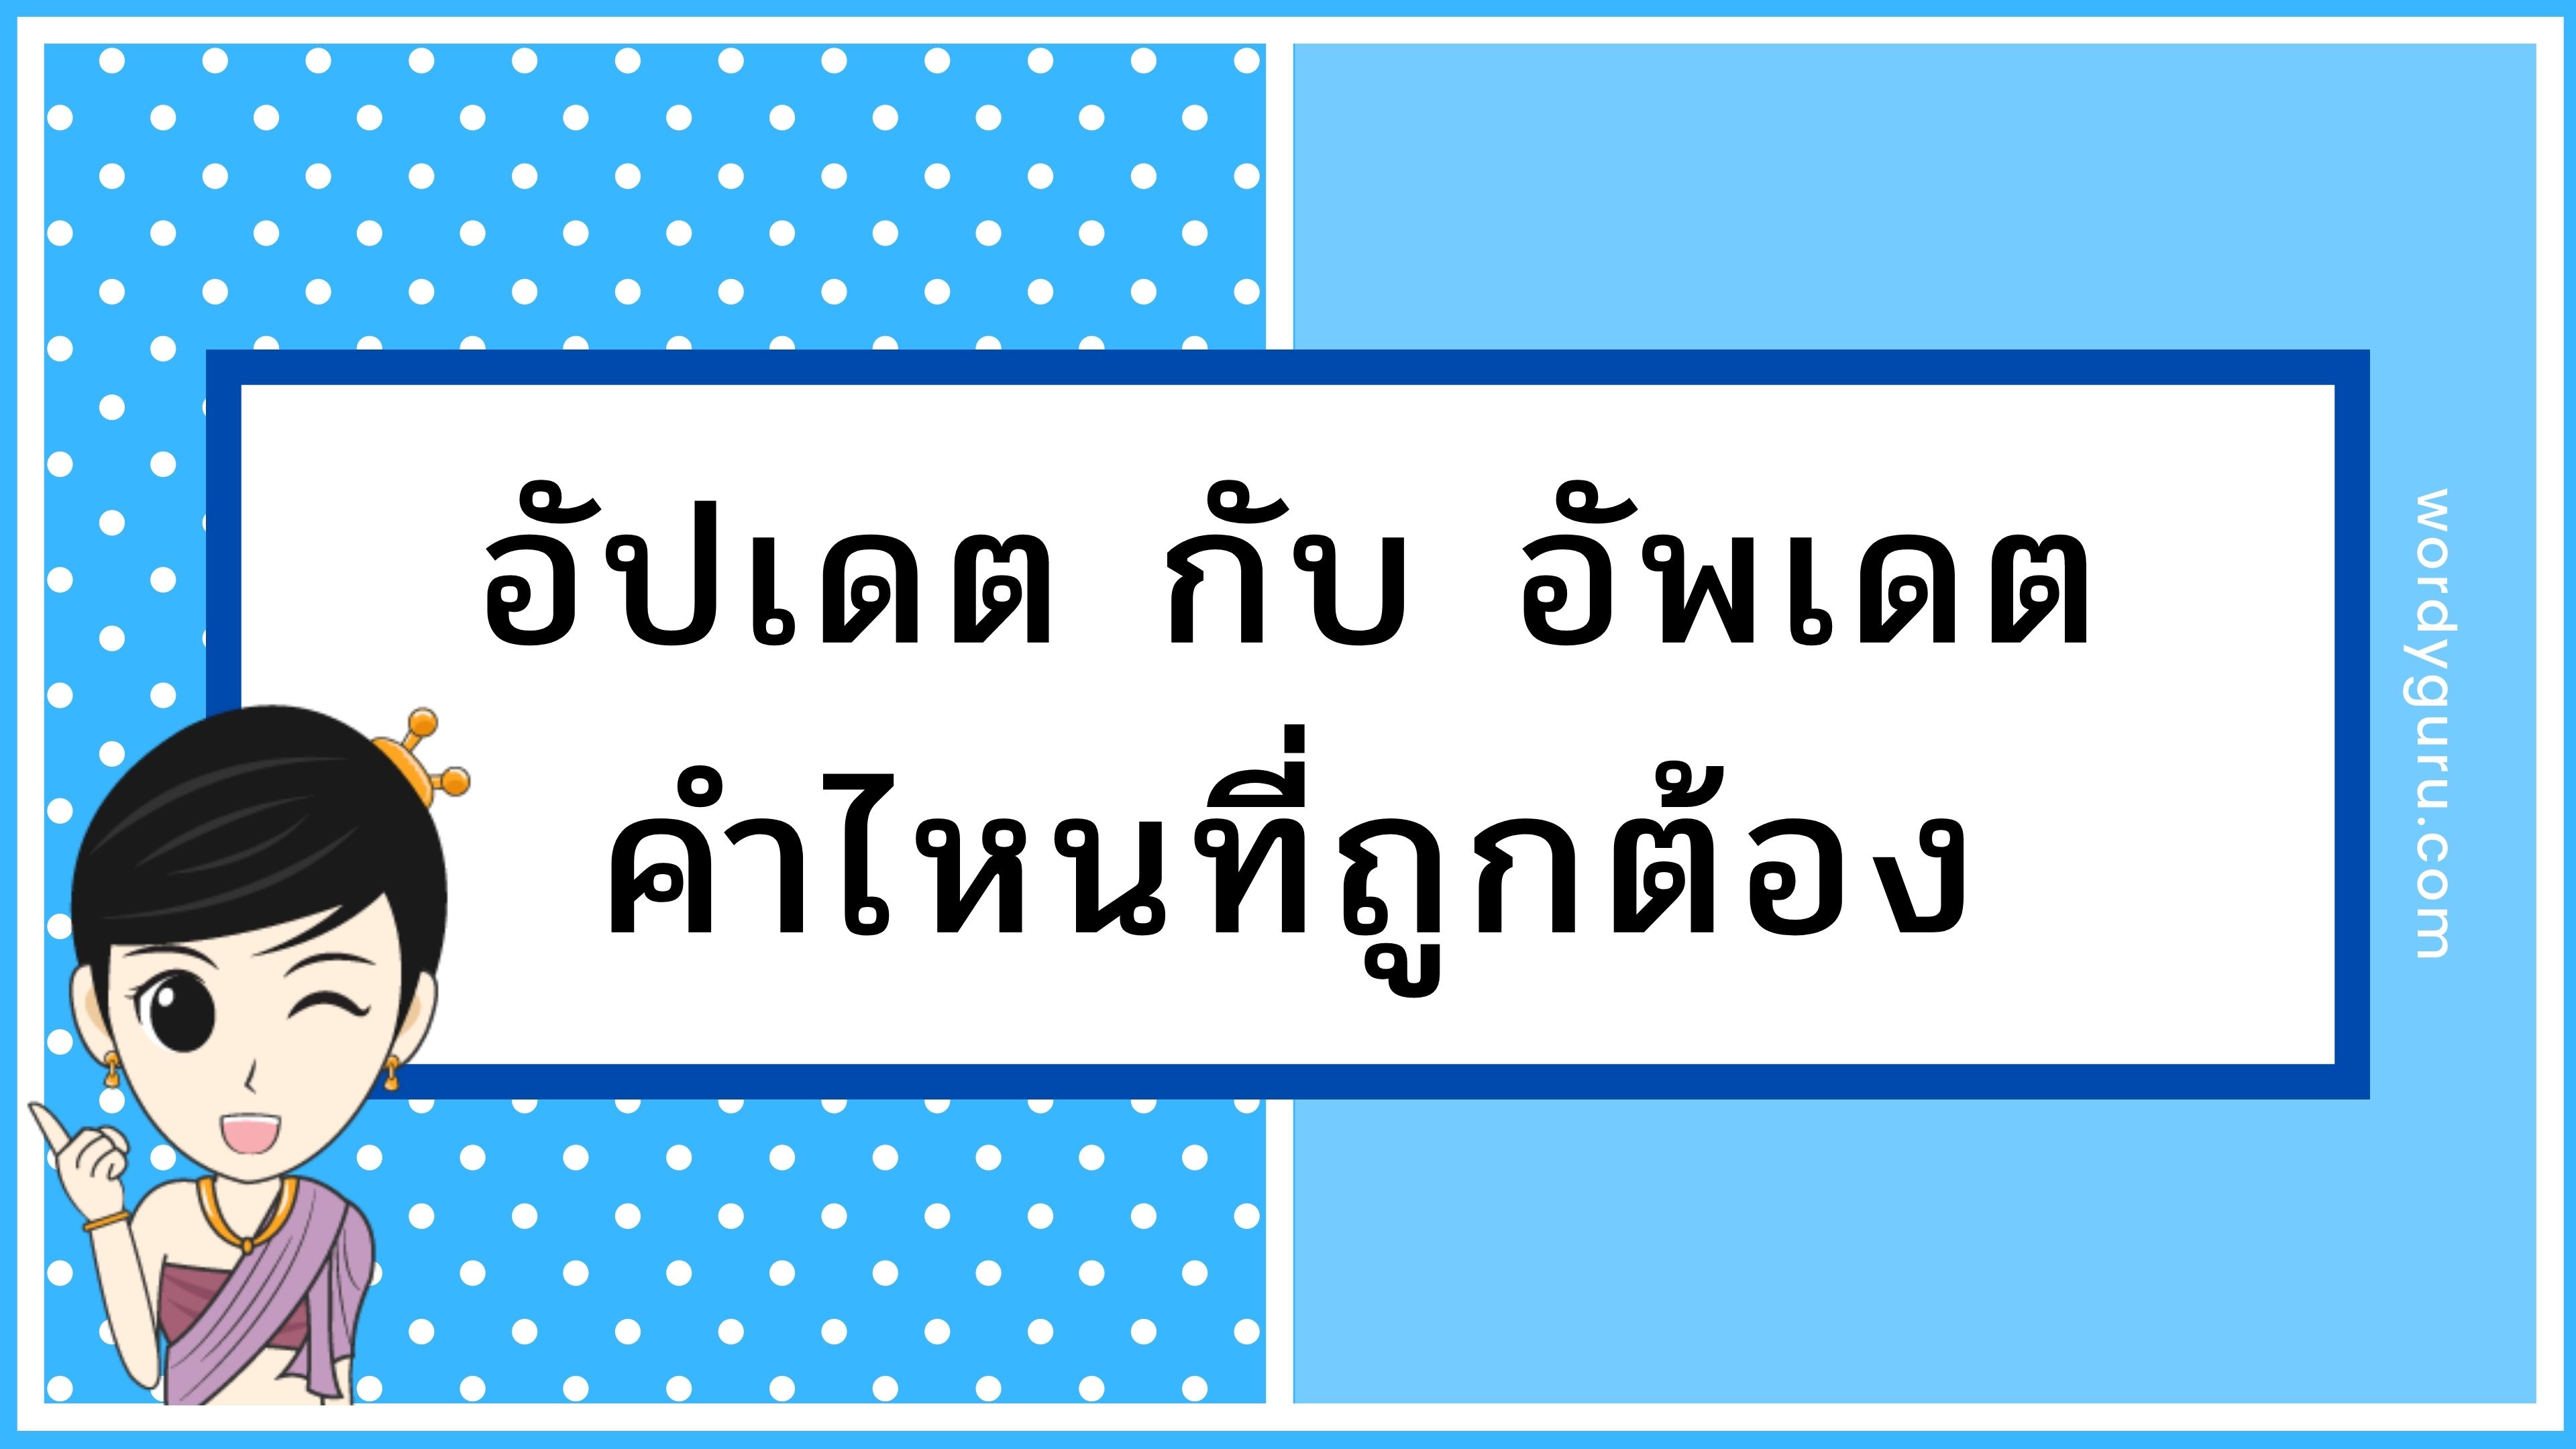 "Update" เขียนเป็นภาษาไทยยังไง อัปเดต หรือ อัพเดท